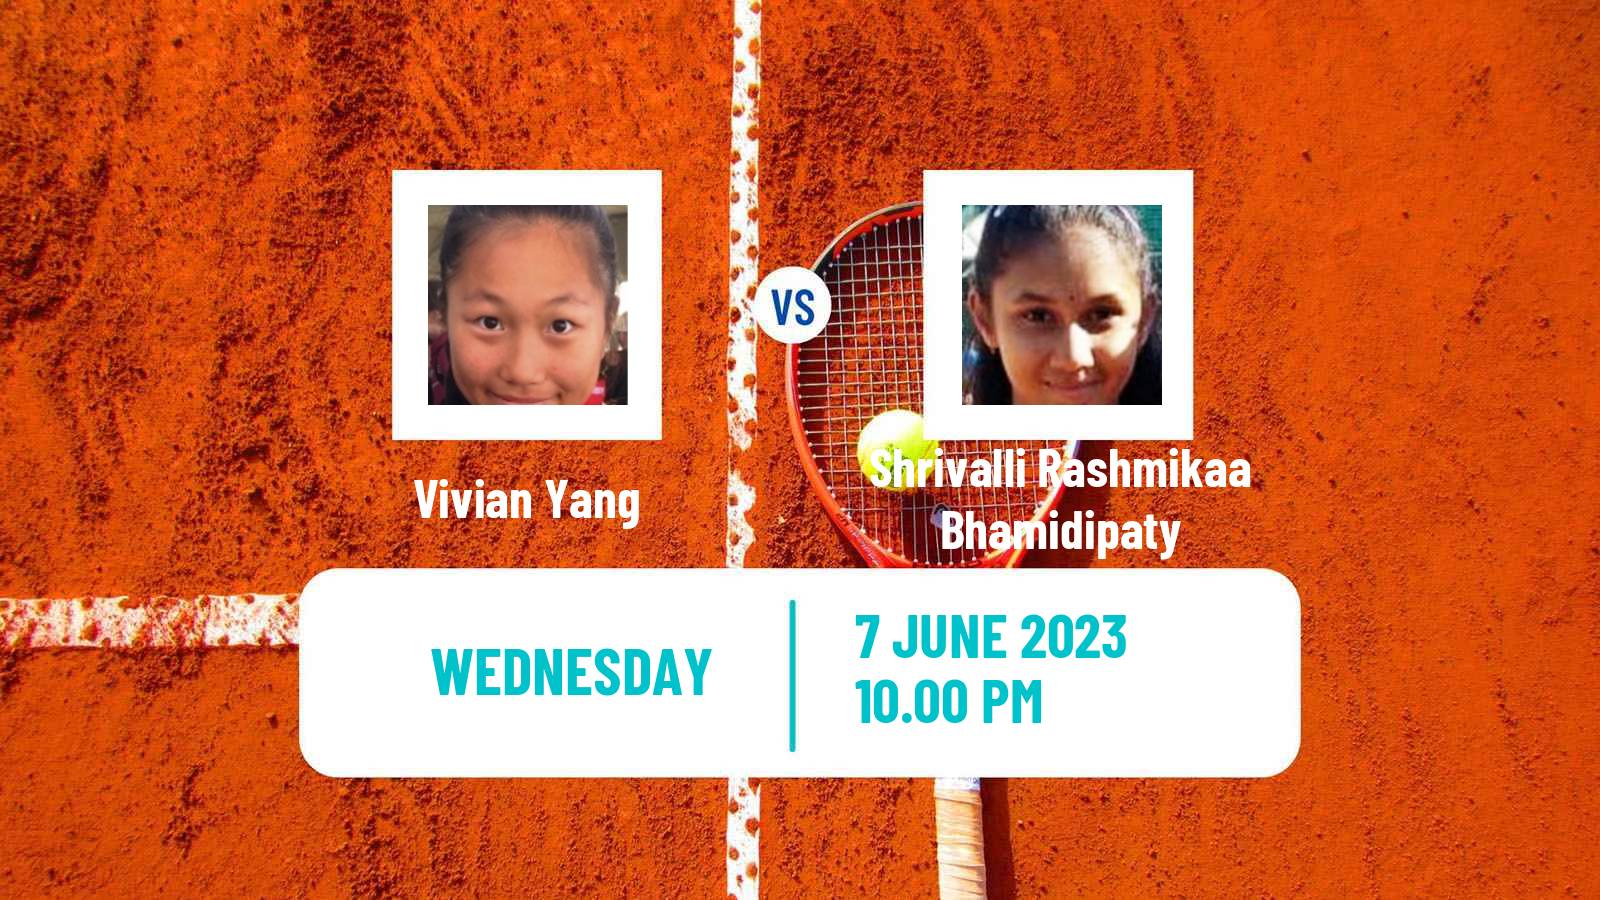 Tennis ITF W15 Nakhon Si Thammarat Women Vivian Yang - Shrivalli Rashmikaa Bhamidipaty